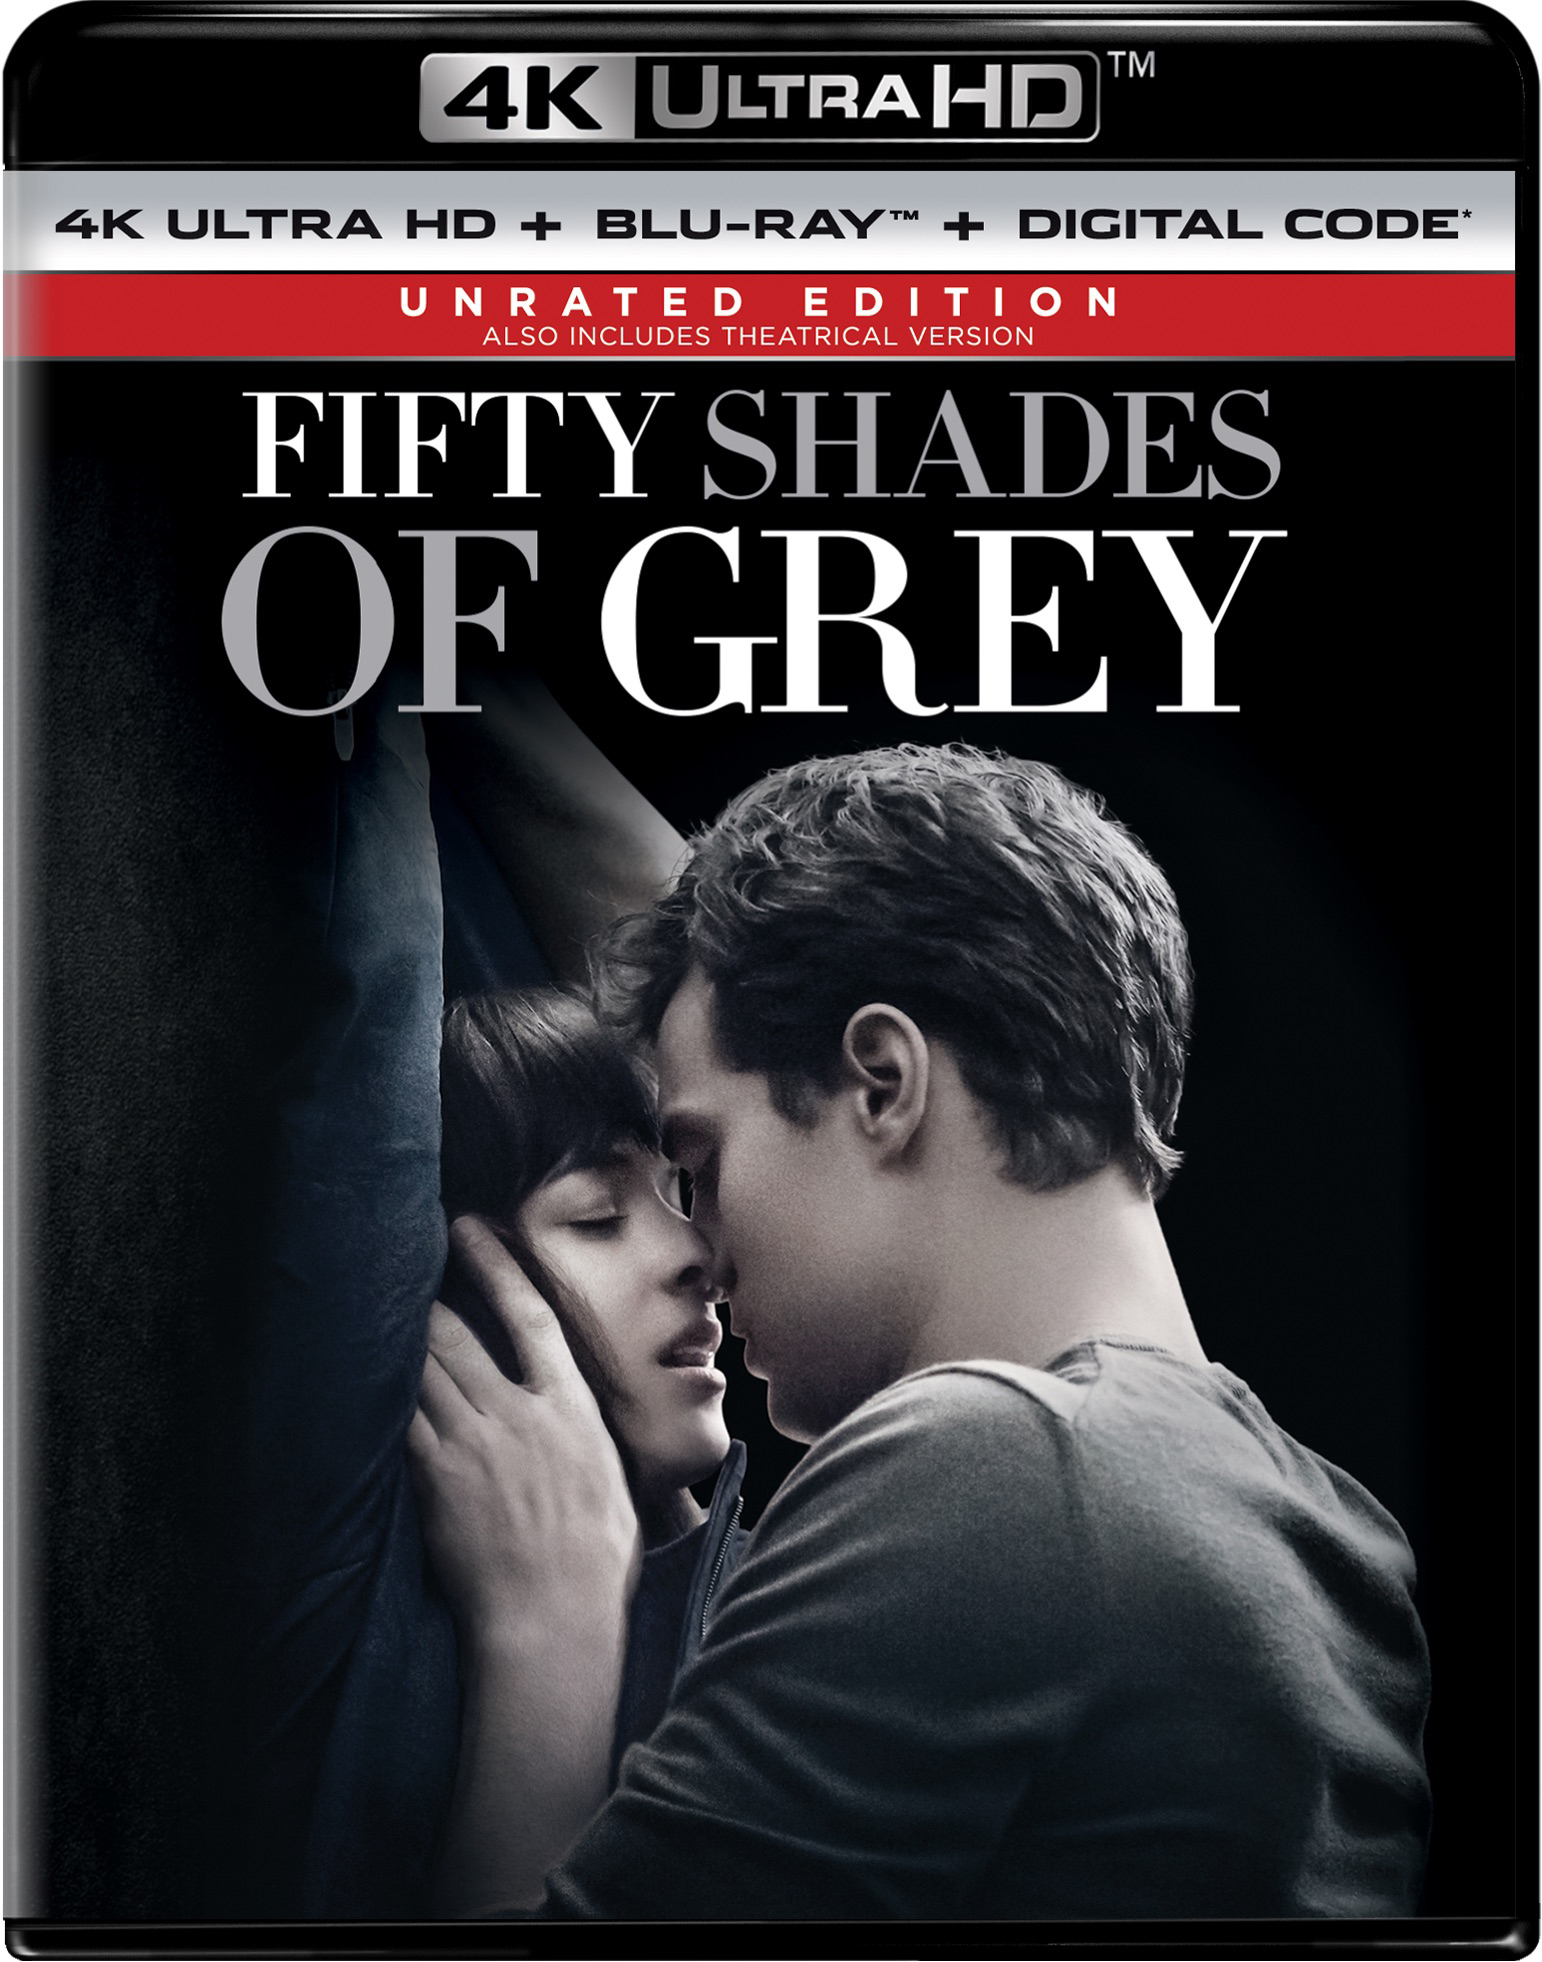 Fifty Shades Of Grey (4K Ultra HD) - UHD [ 2015 ]  - Drama Movies On 4K Ultra HD Blu-ray - Movies On GRUV